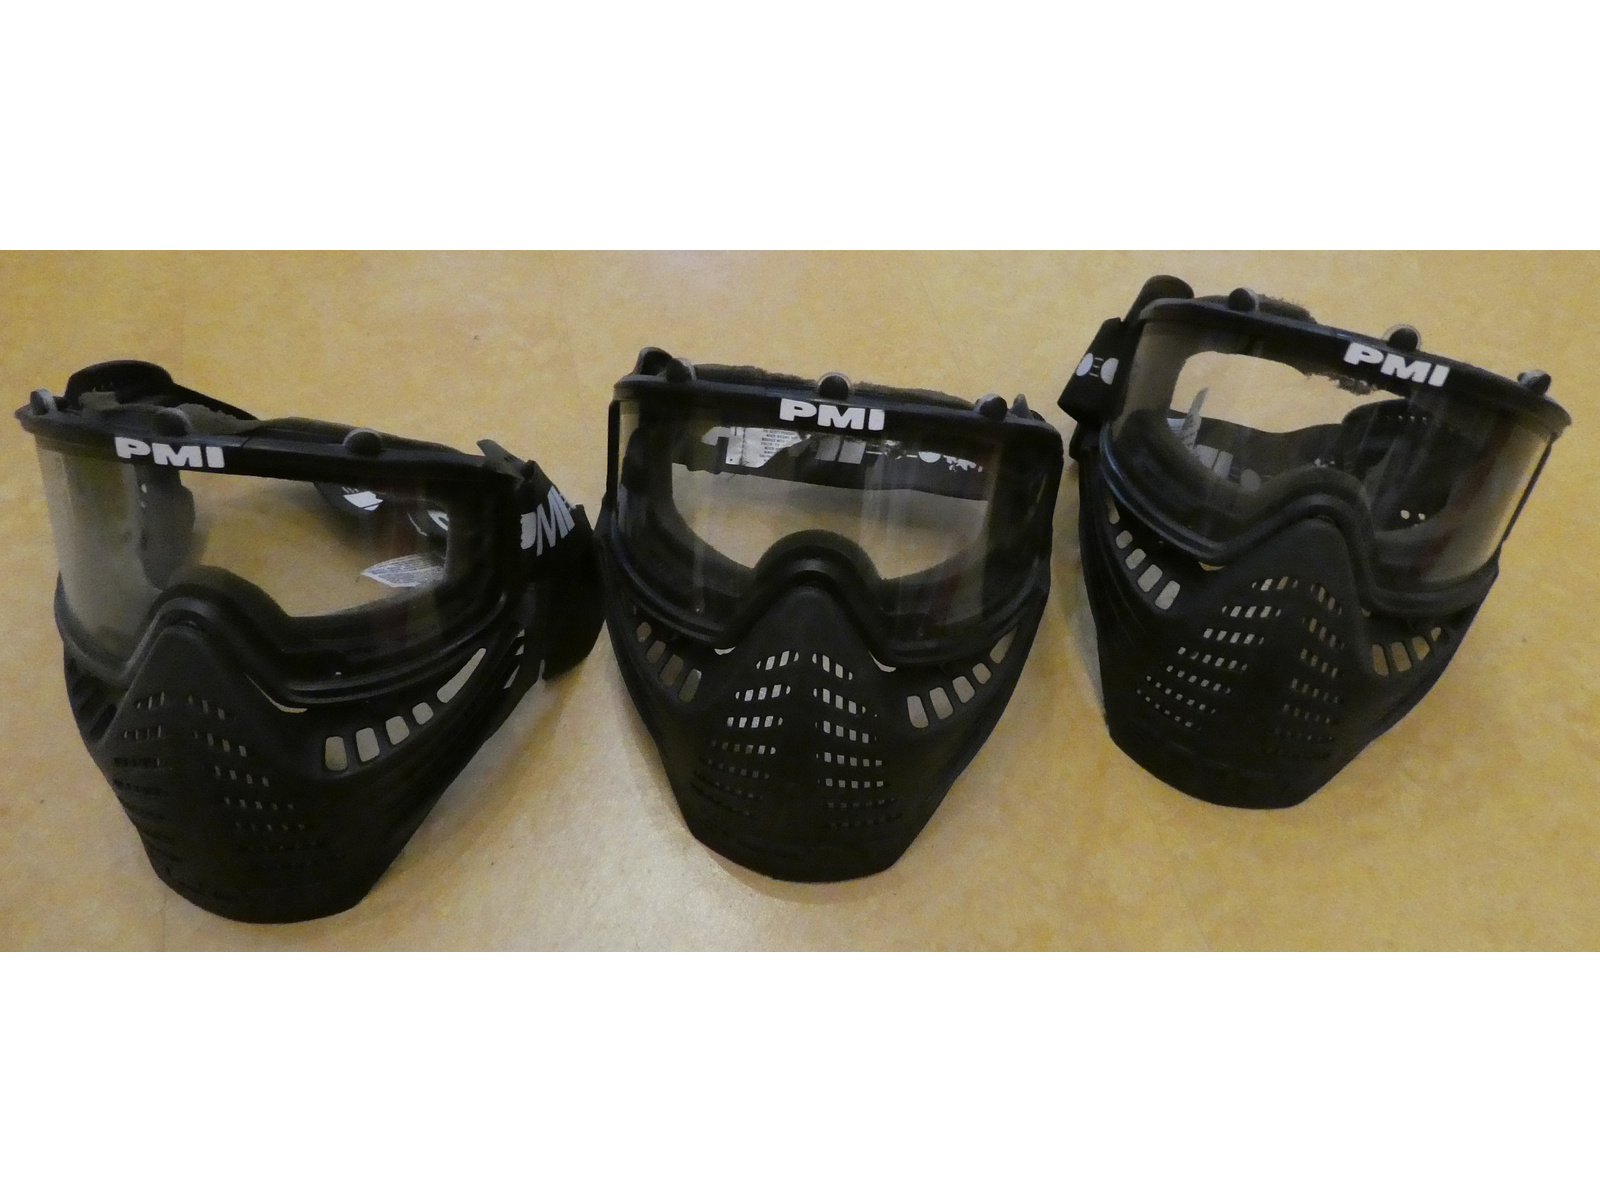 Paintball Schutzmasken Scott PMI 3 Stück